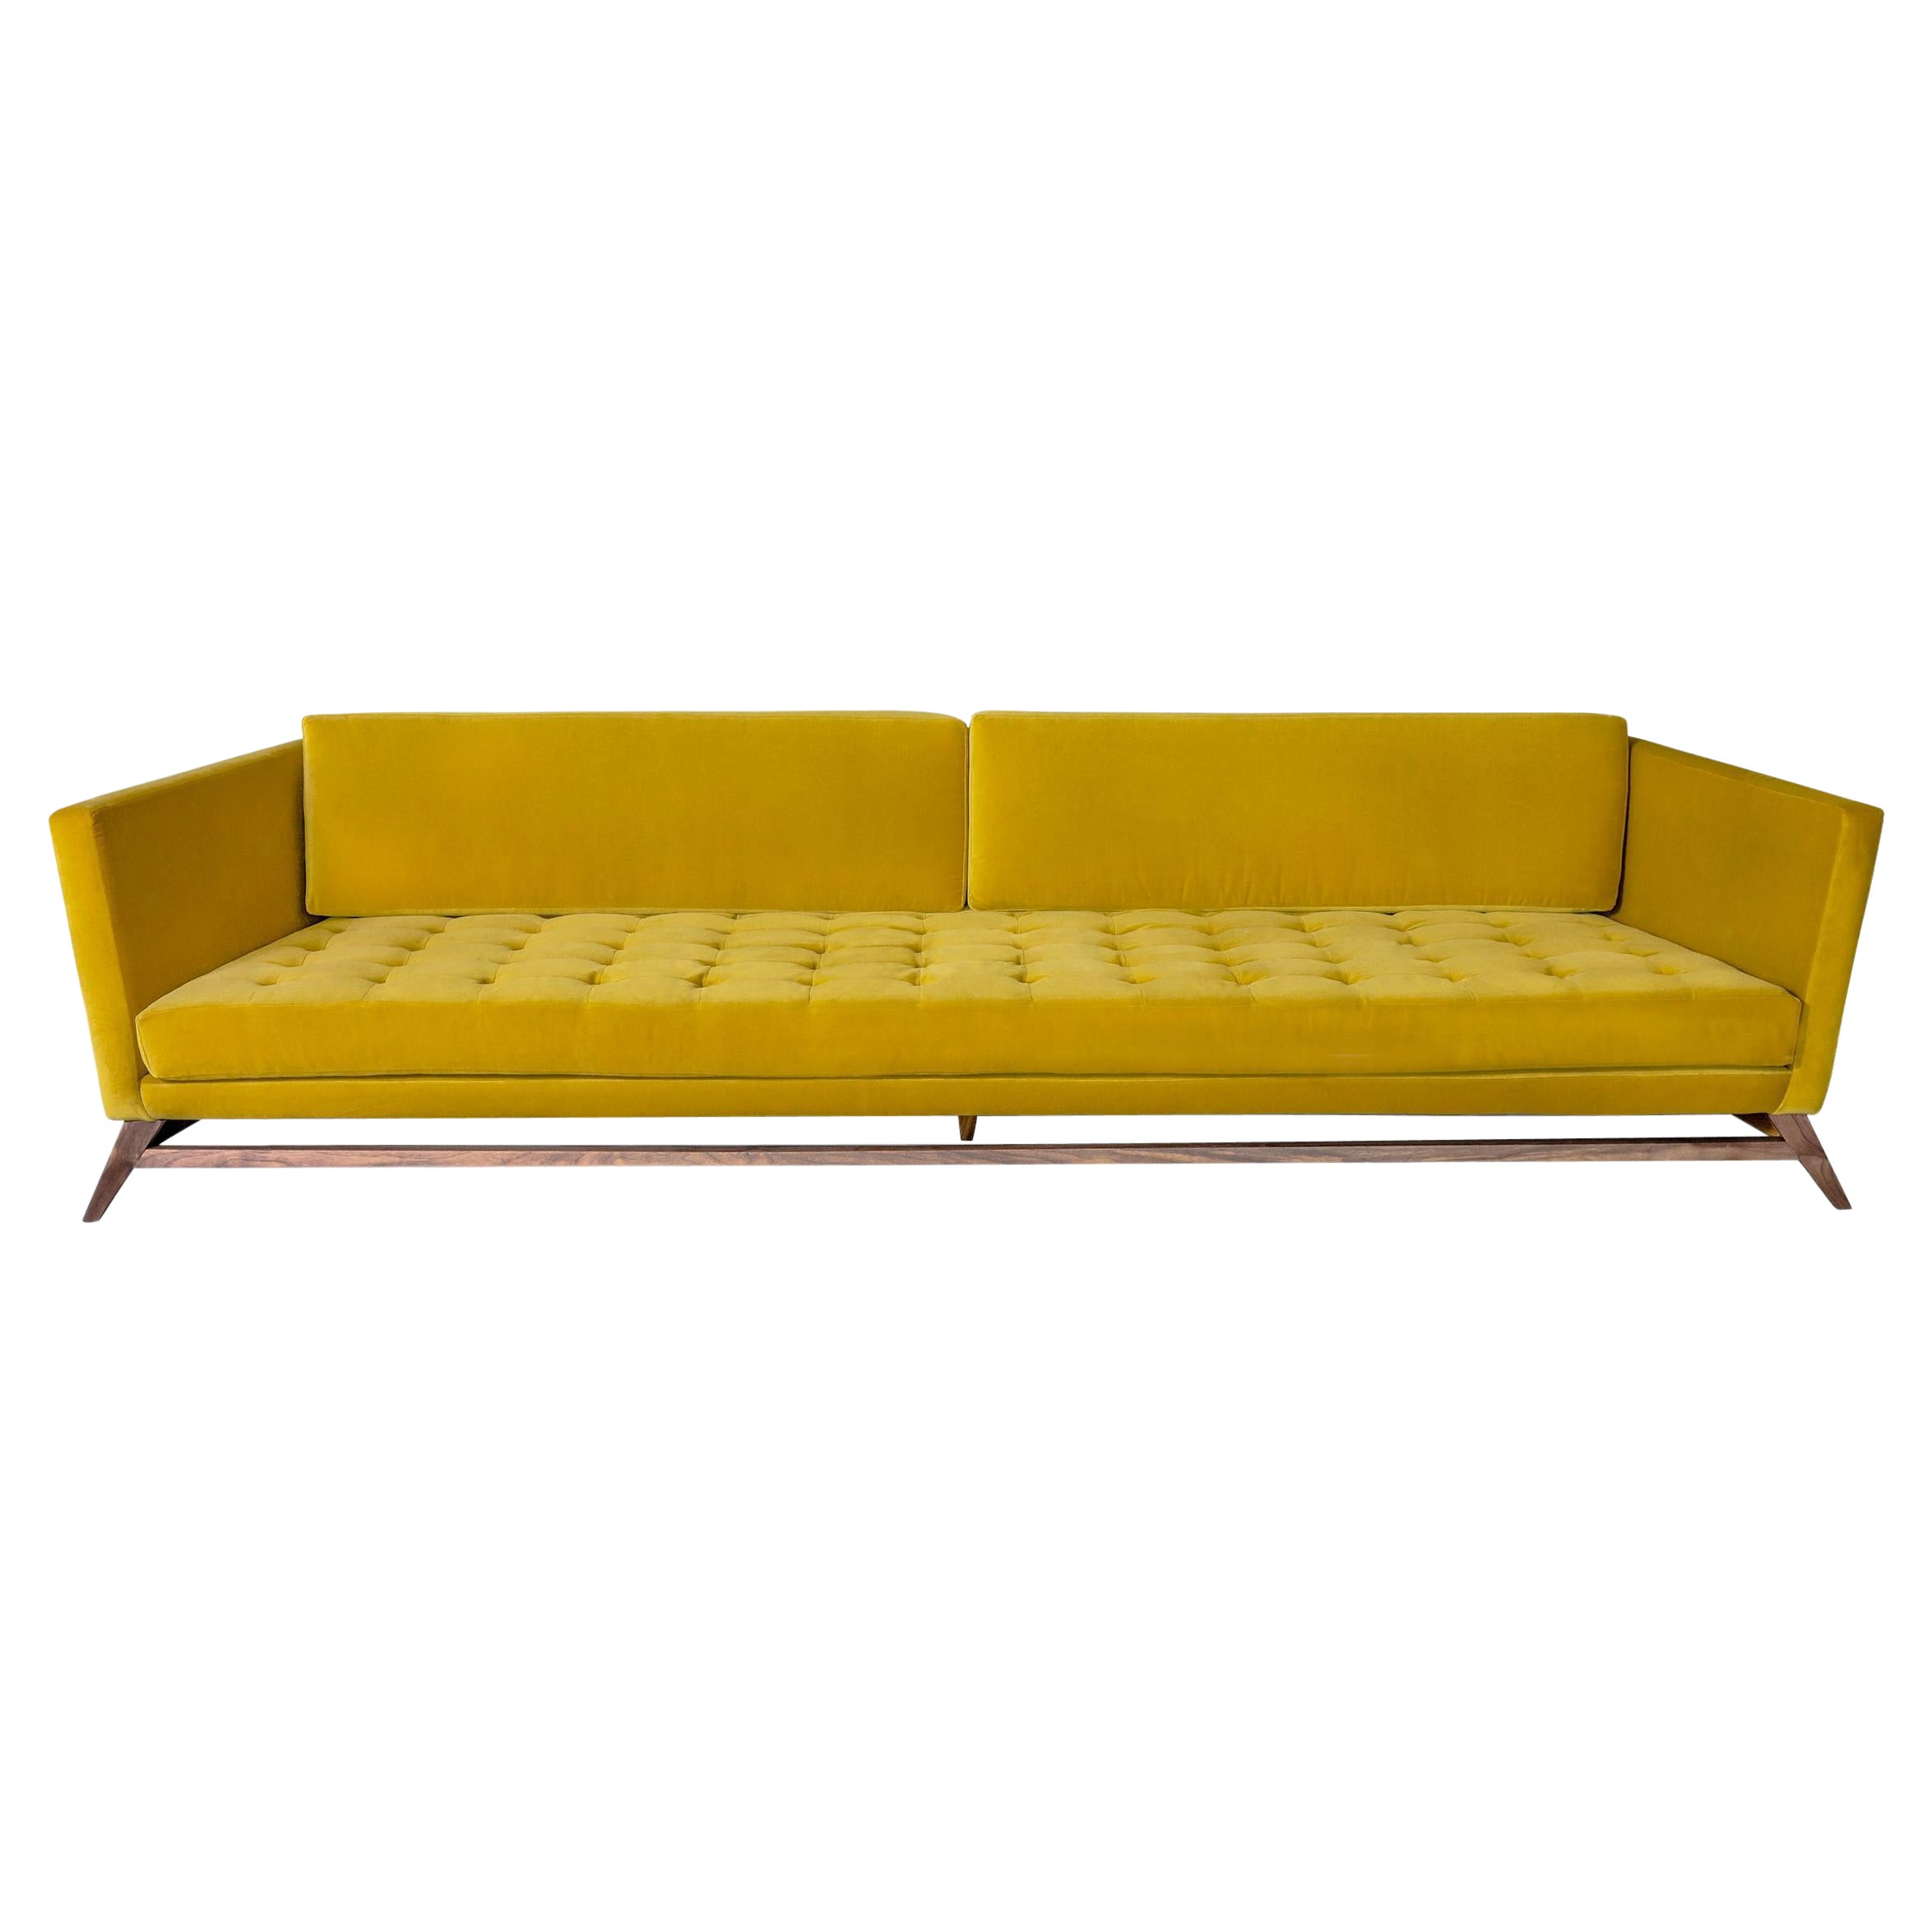 Eclipse-Sofa von Atra Design, gelb